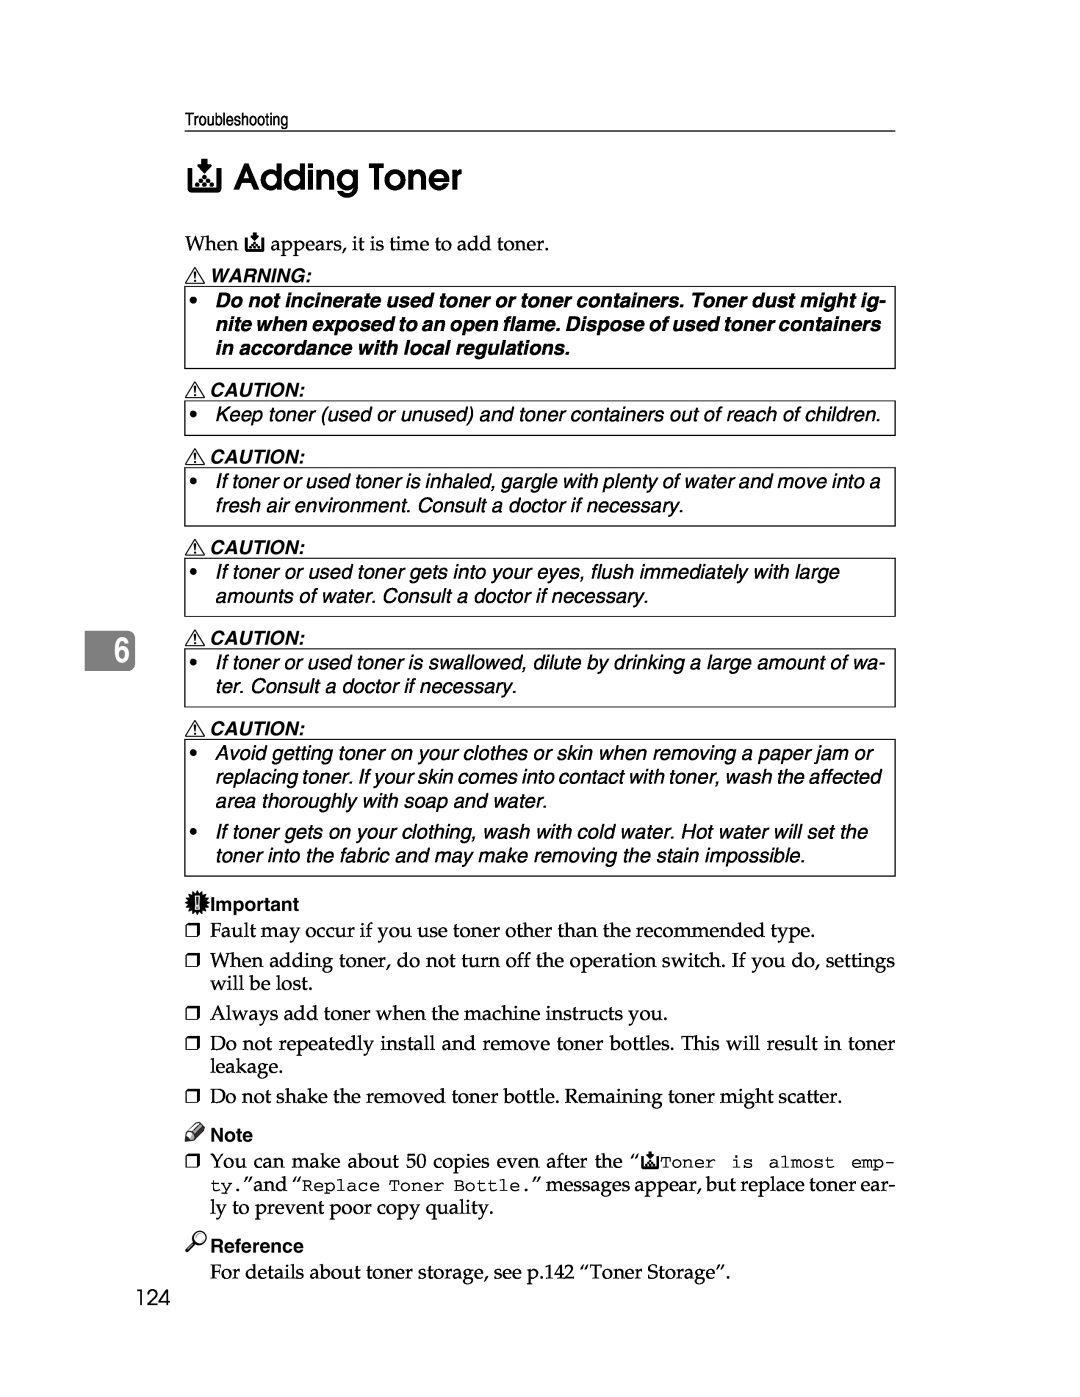 Lanier LD225, LD230 manual D Adding Toner, R Warning, R Caution, Reference 